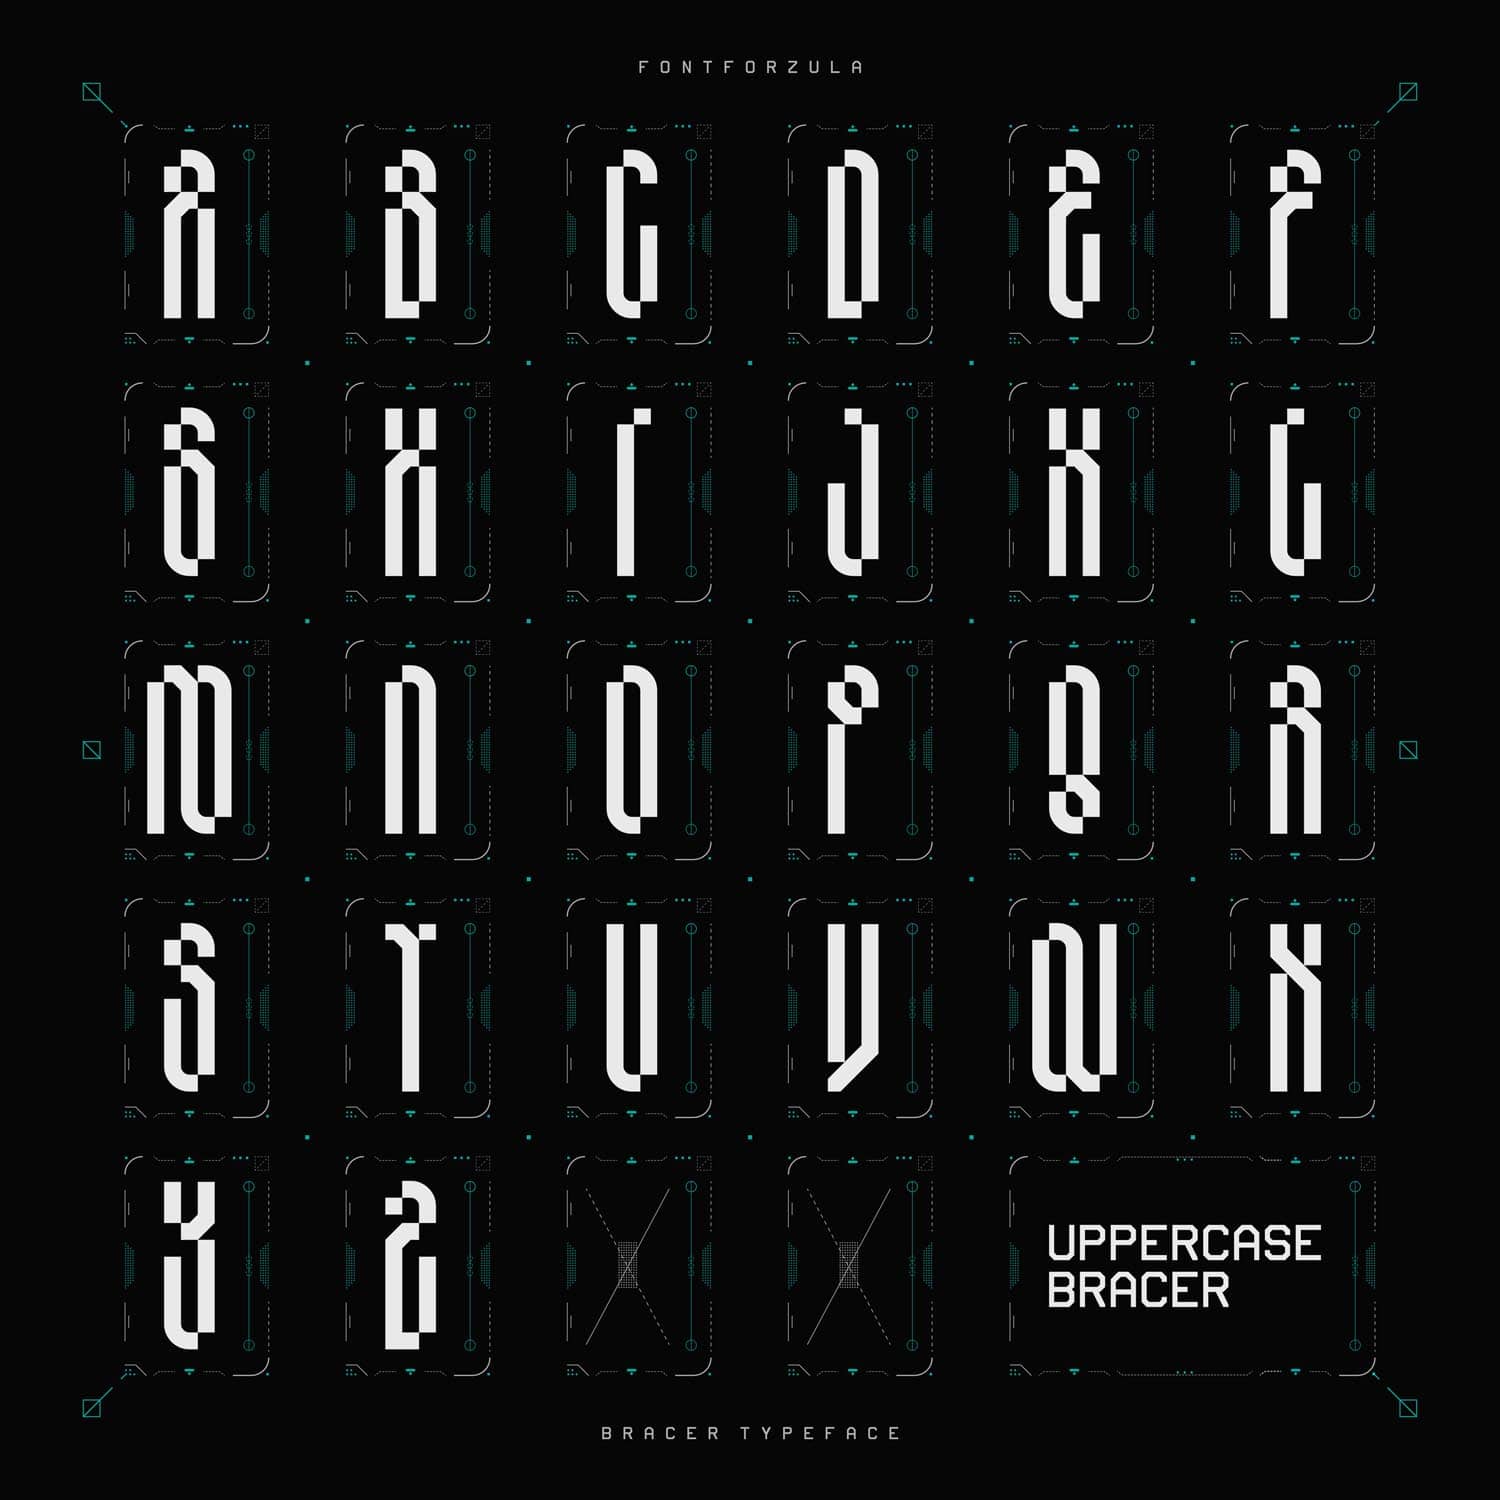 Uppercase Letters - Bracer Typeface